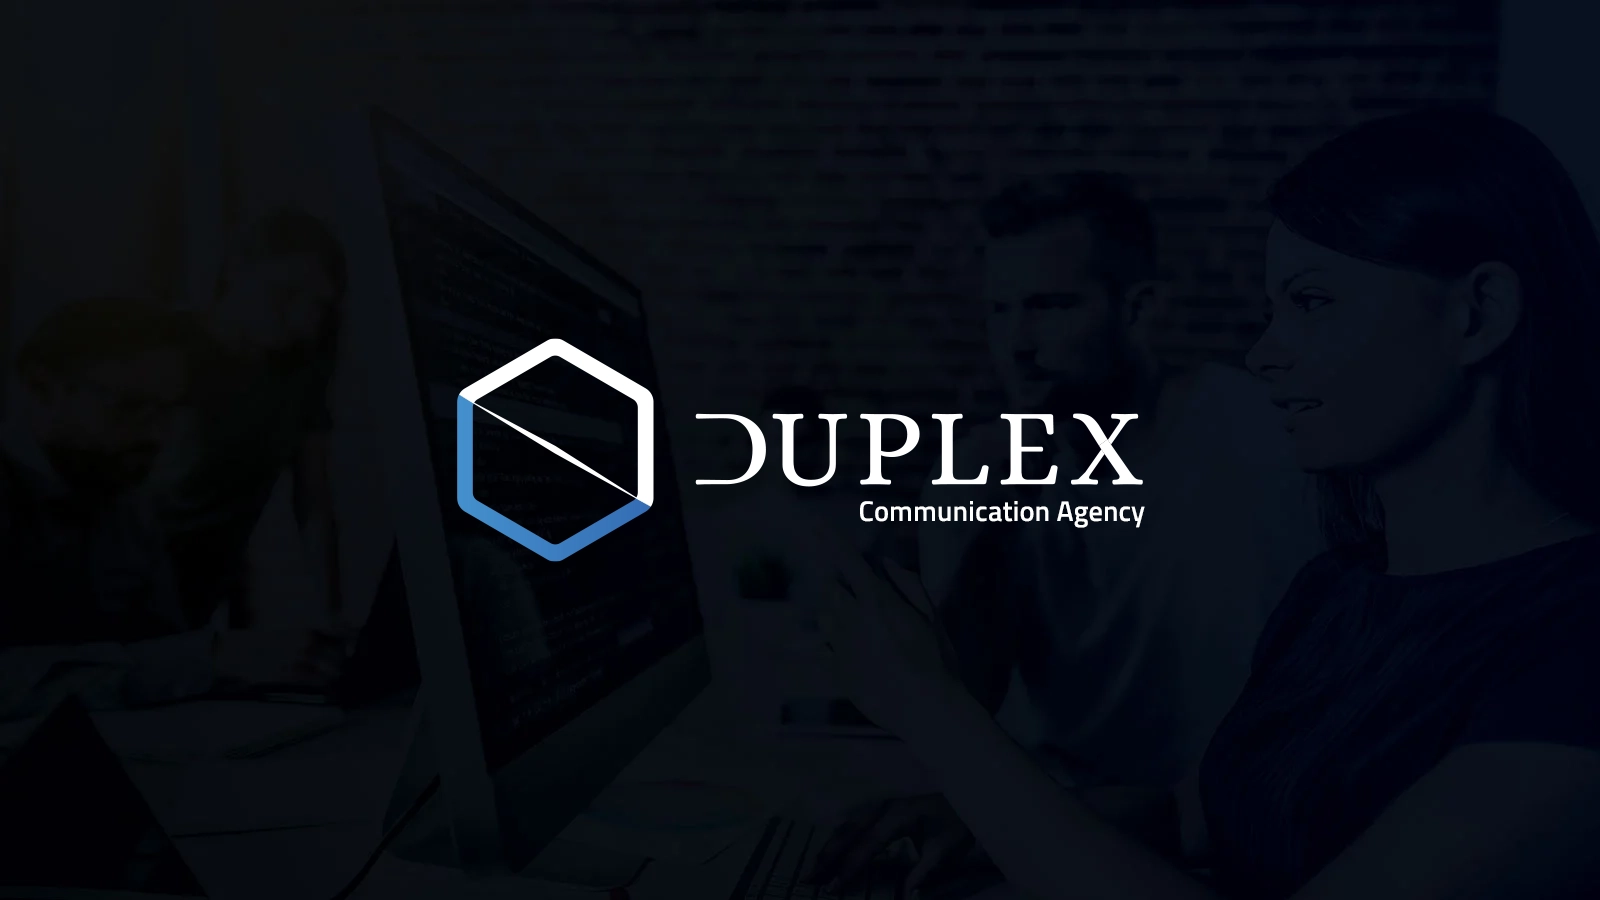 (c) Duplex38.com